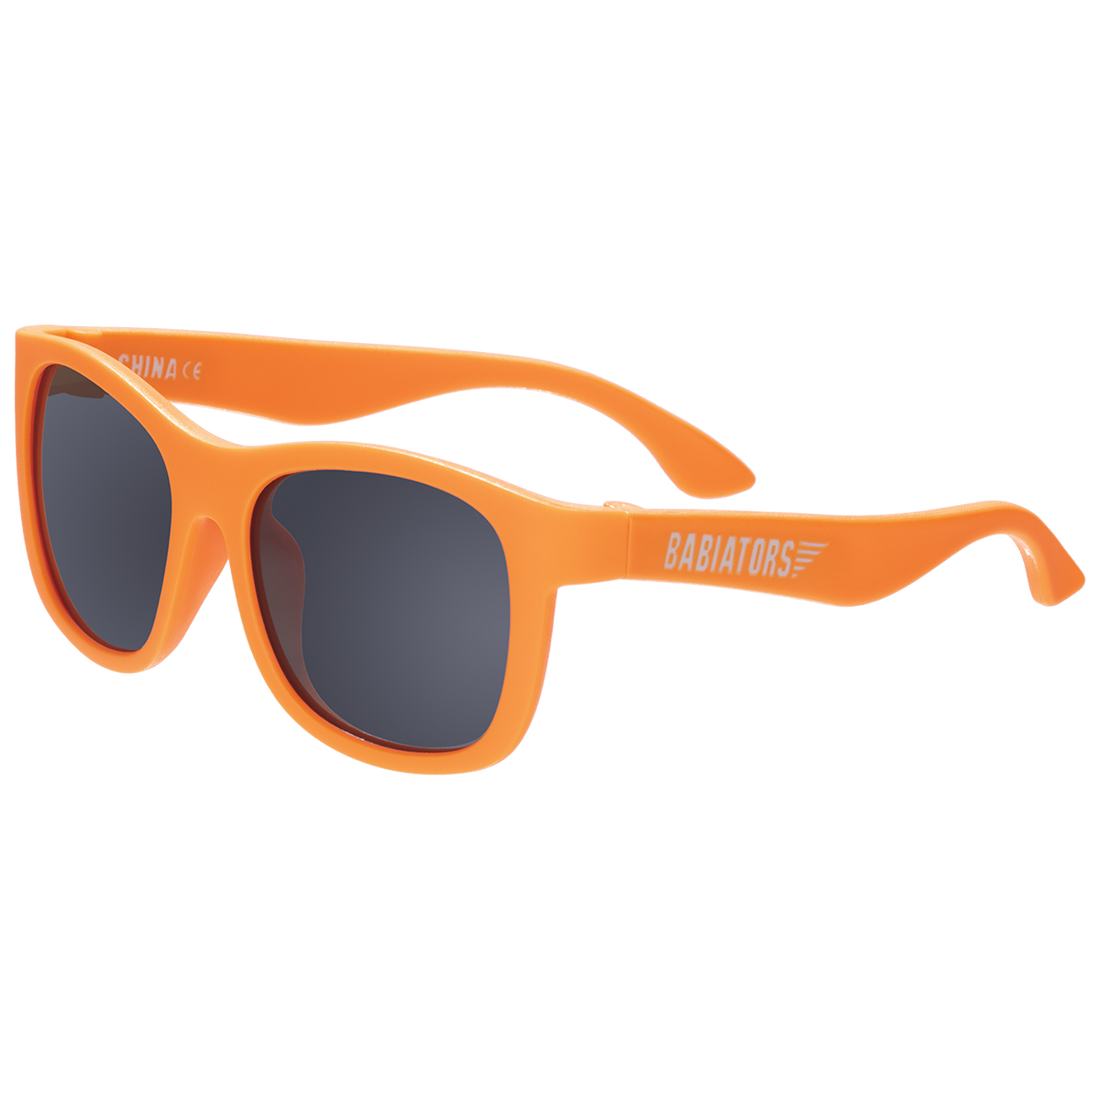 Navigator Kids Sunglasses in Orange Crush